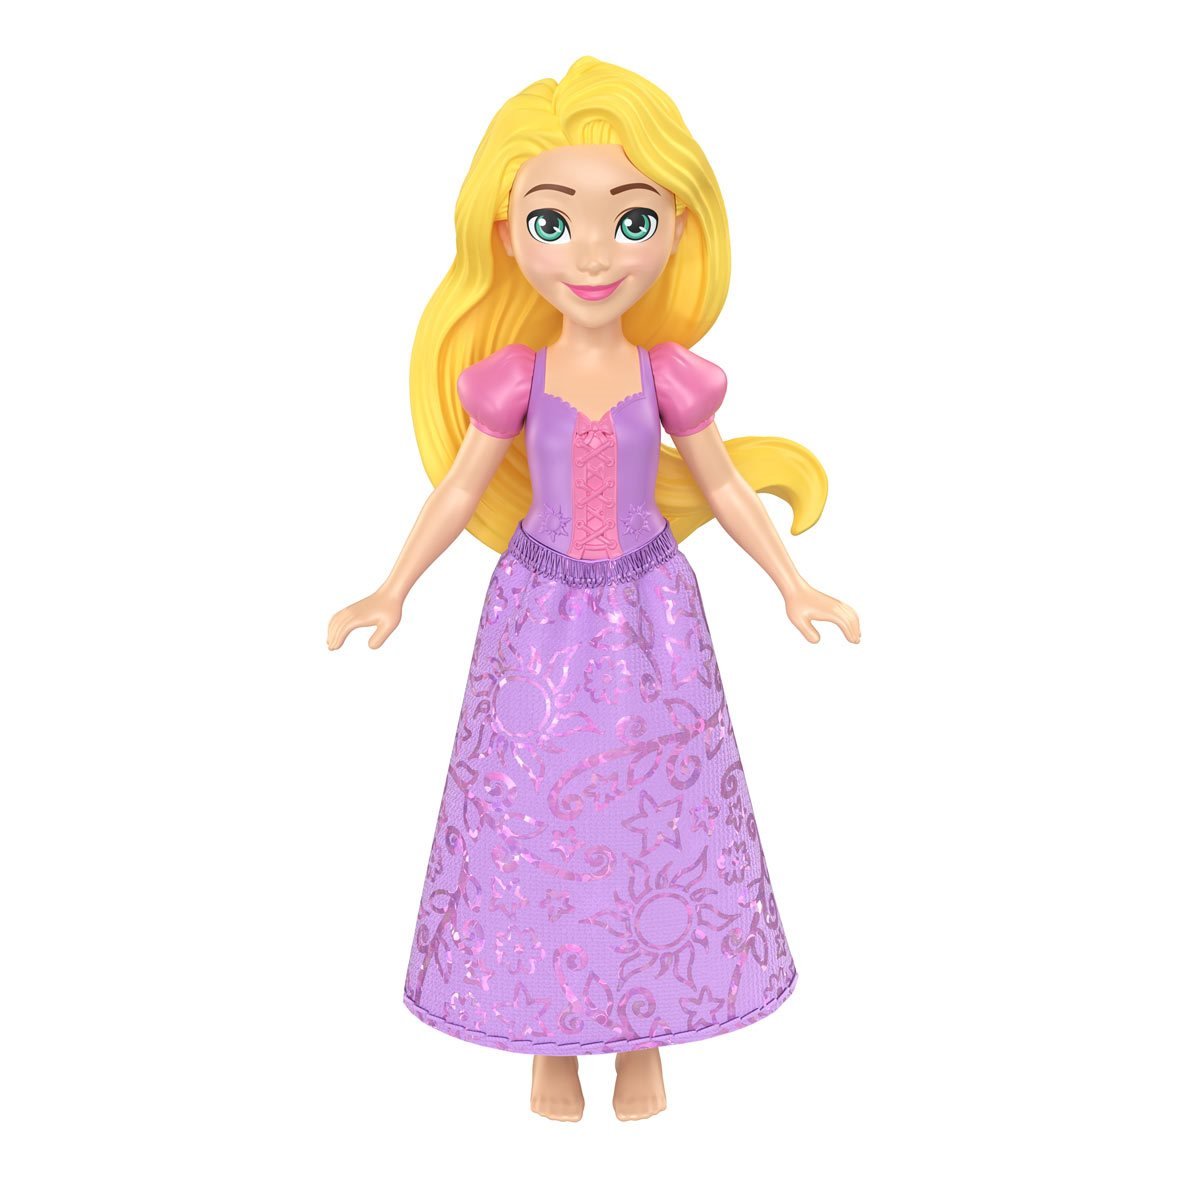  Mattel Disney Princess Toys, 6 Posable Small Dolls